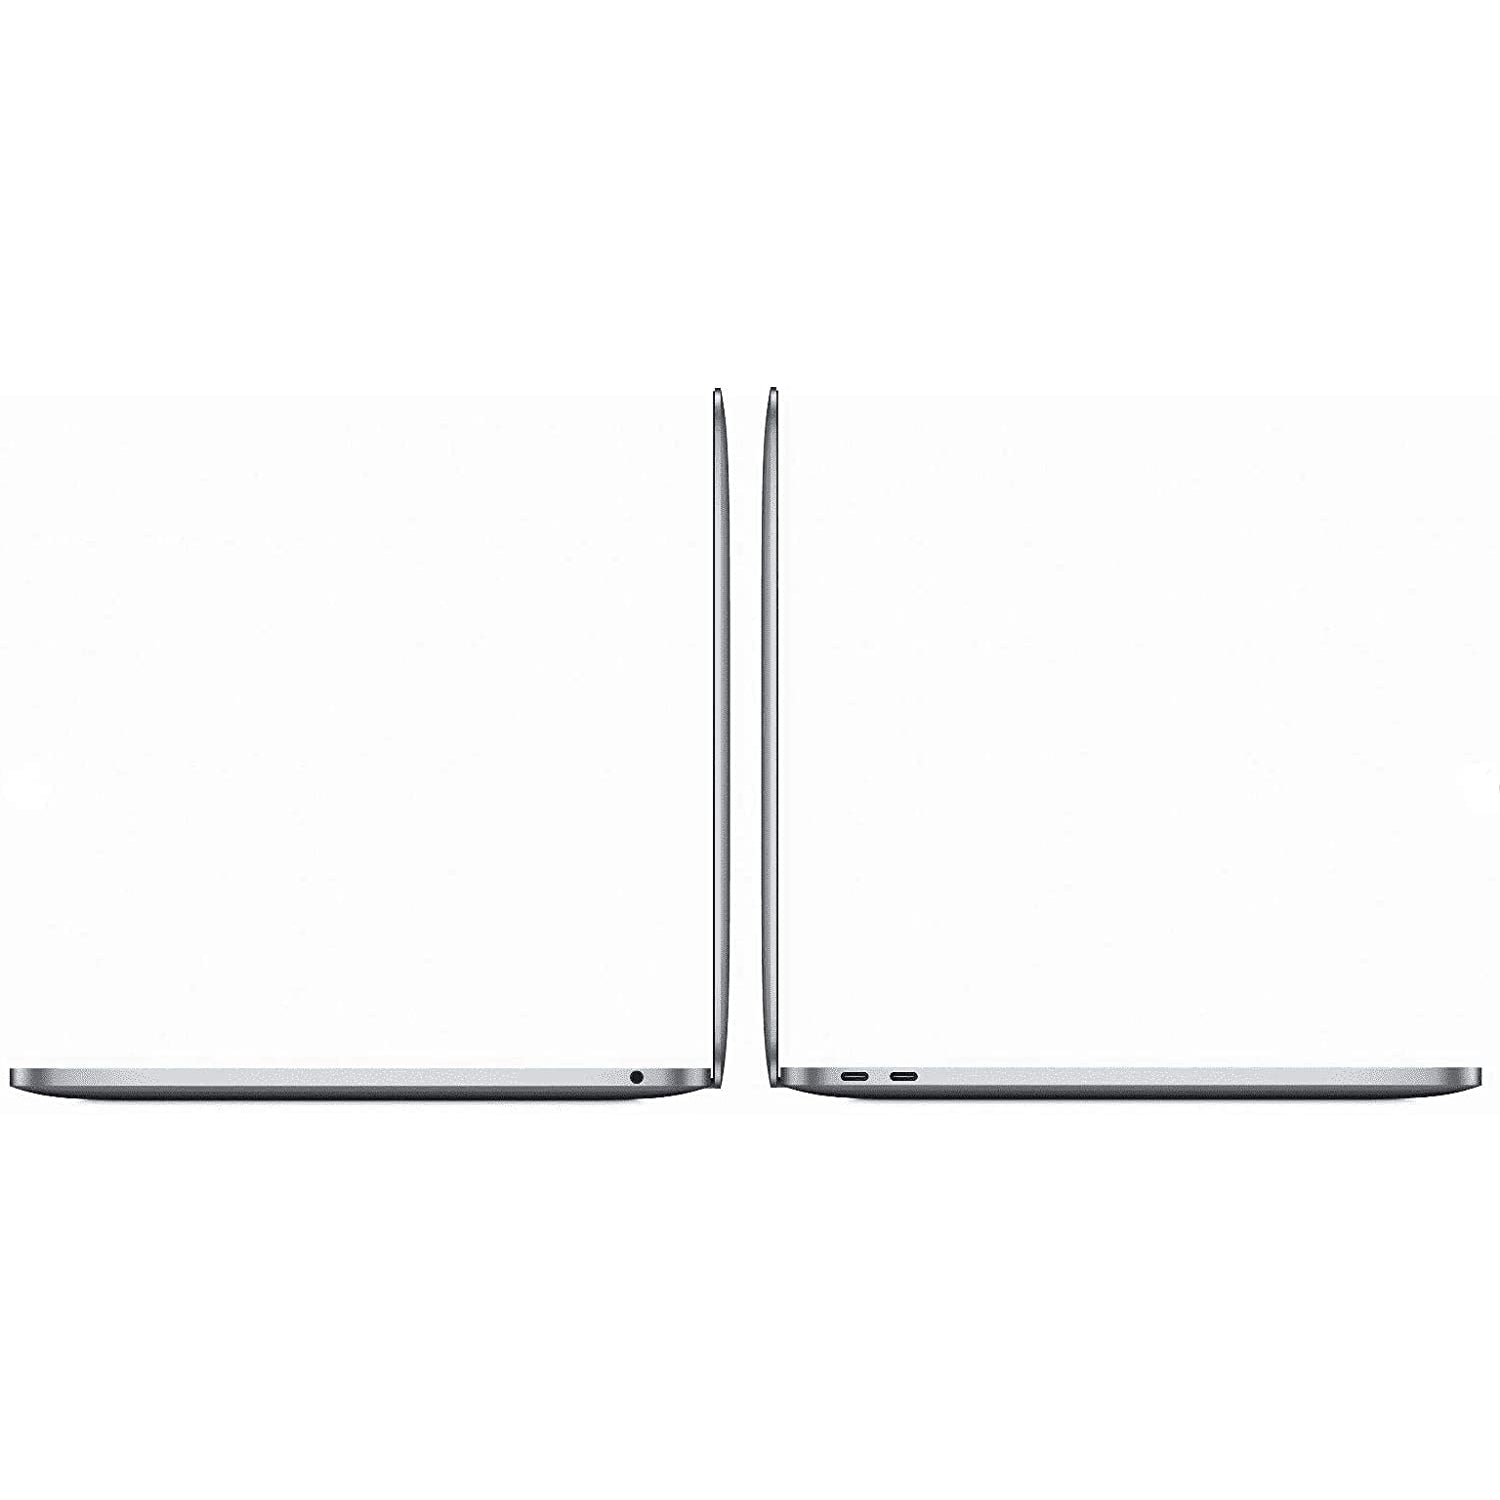 Apple MacBook Pro 13.3'' MPXQ2LL/A (2017) Laptop, Intel Core i5, 8GB RAM, 128GB, Space Grey - Refurbished Pristine